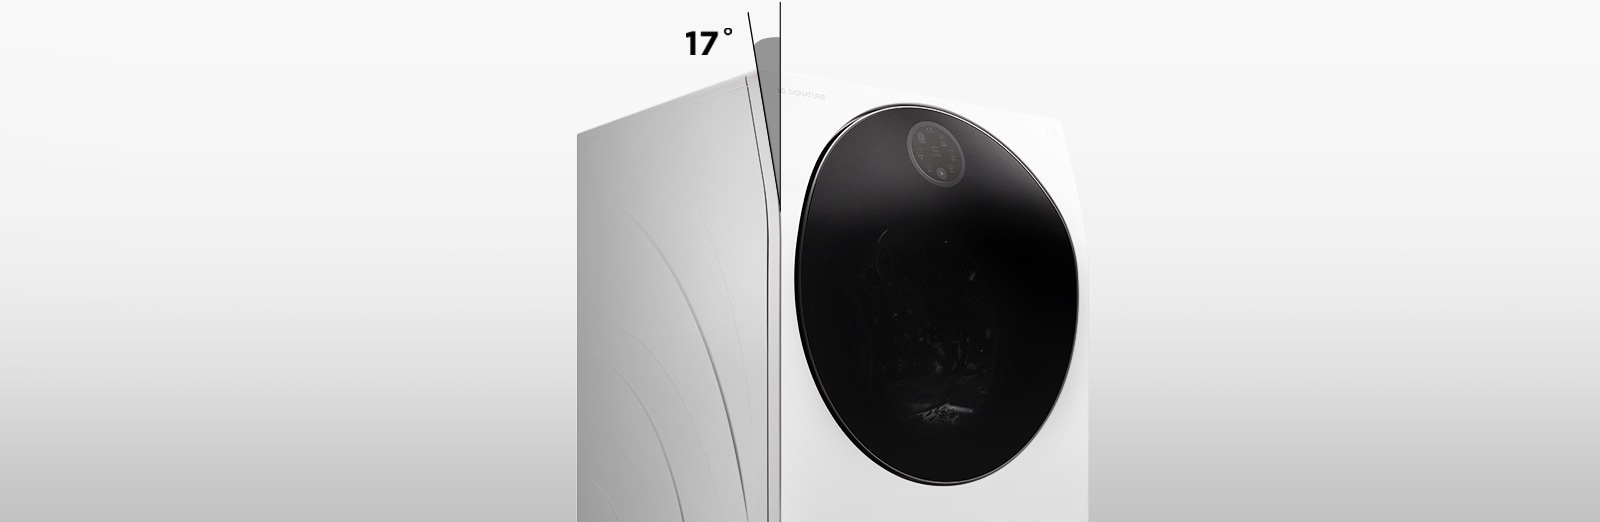 LG SIGNATUREE 洗衣機放置在白色背景畫面的中央位置。